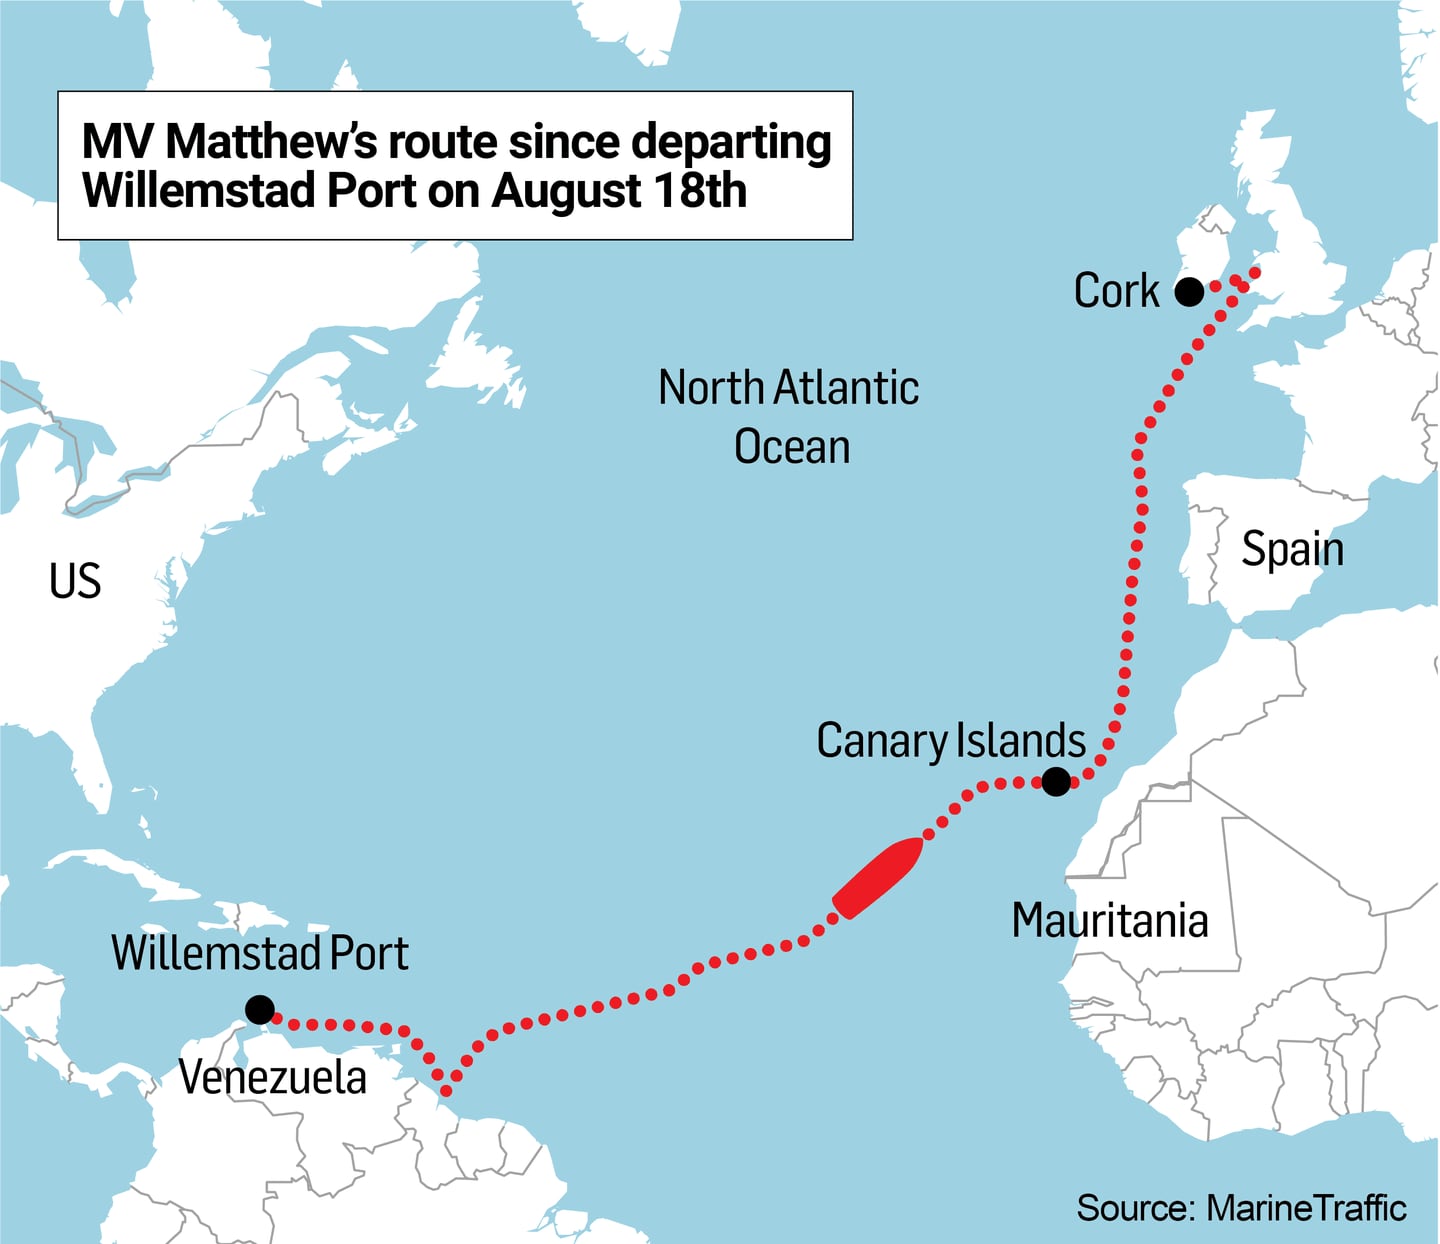 MV Matthew’s route since departing Willemstad Port on August 18th